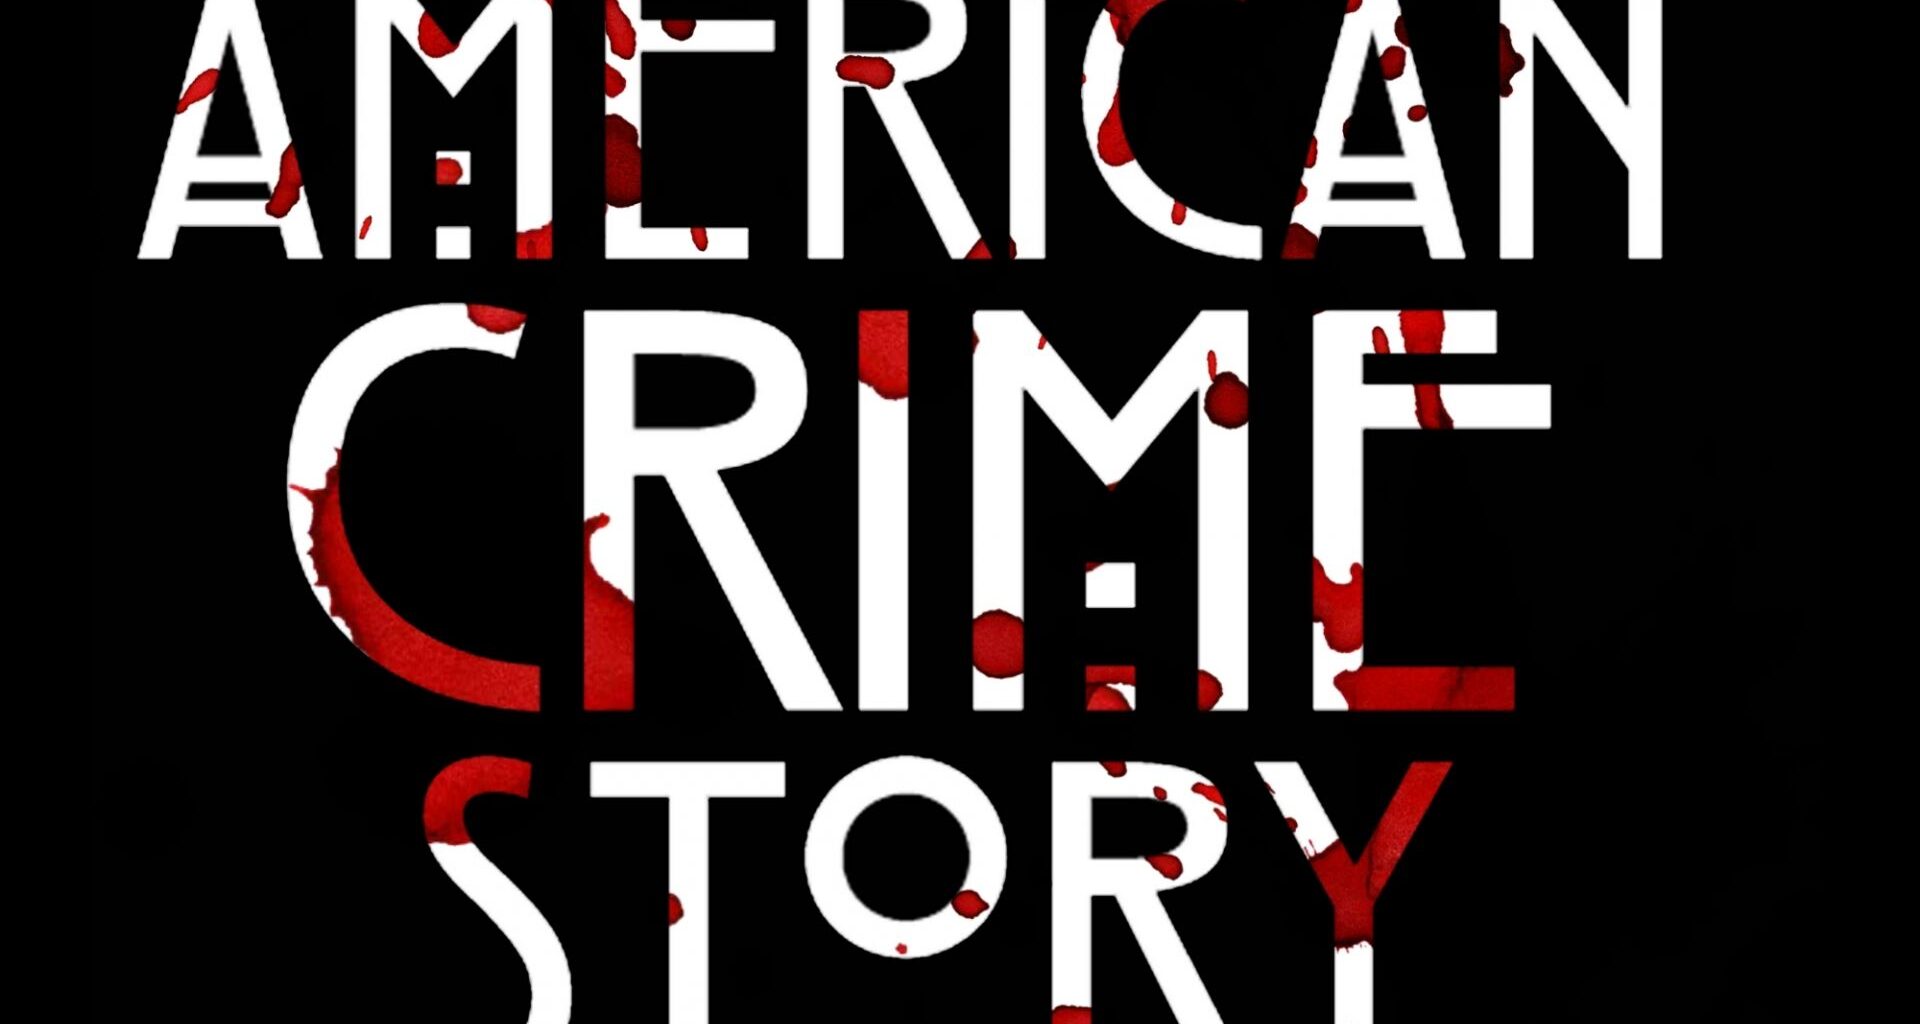 American Crime Story Season 4 Release Date Confirmed